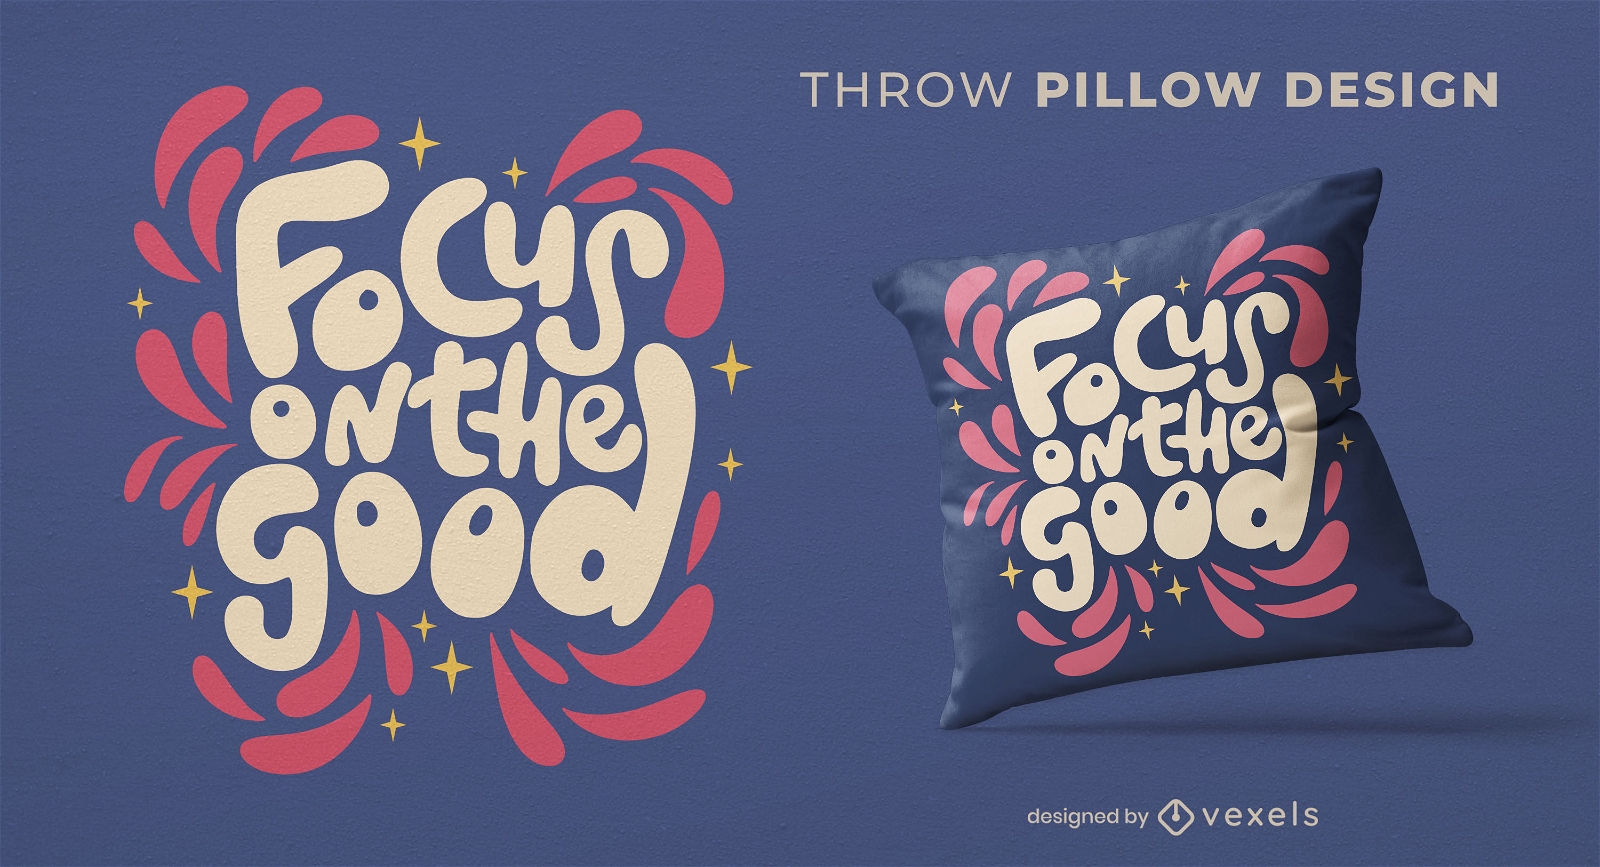 Focus on the good throw pillow design